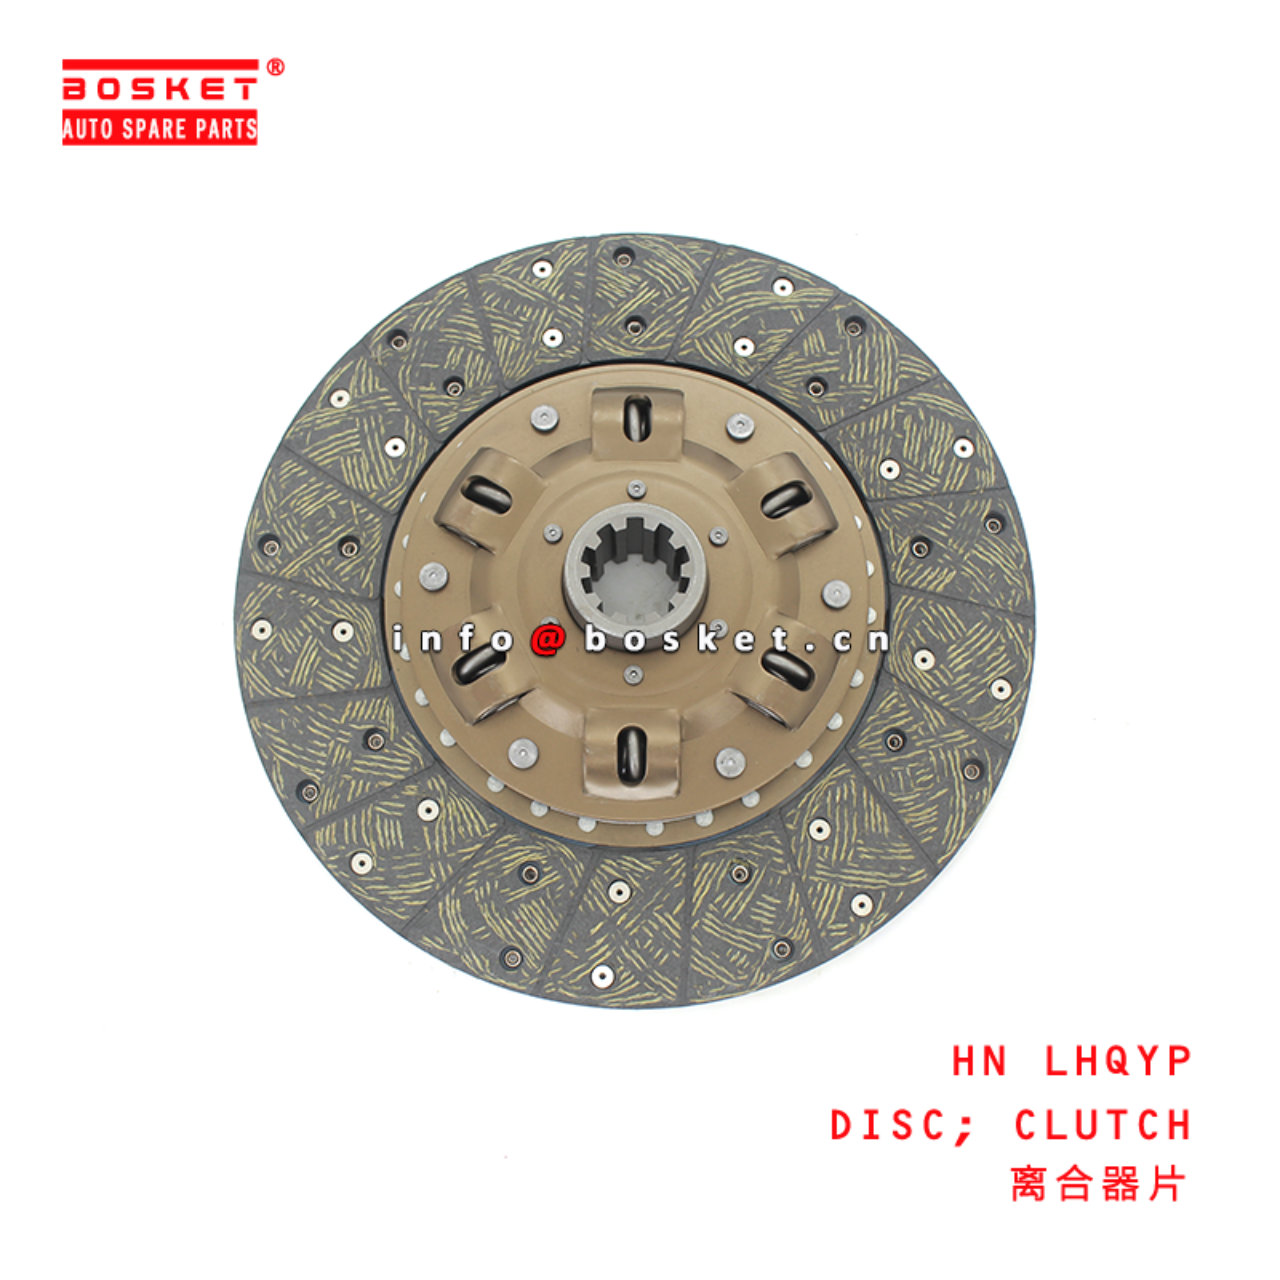 HN LHQYP Clutch Disc Suitable for ISUZU HINO